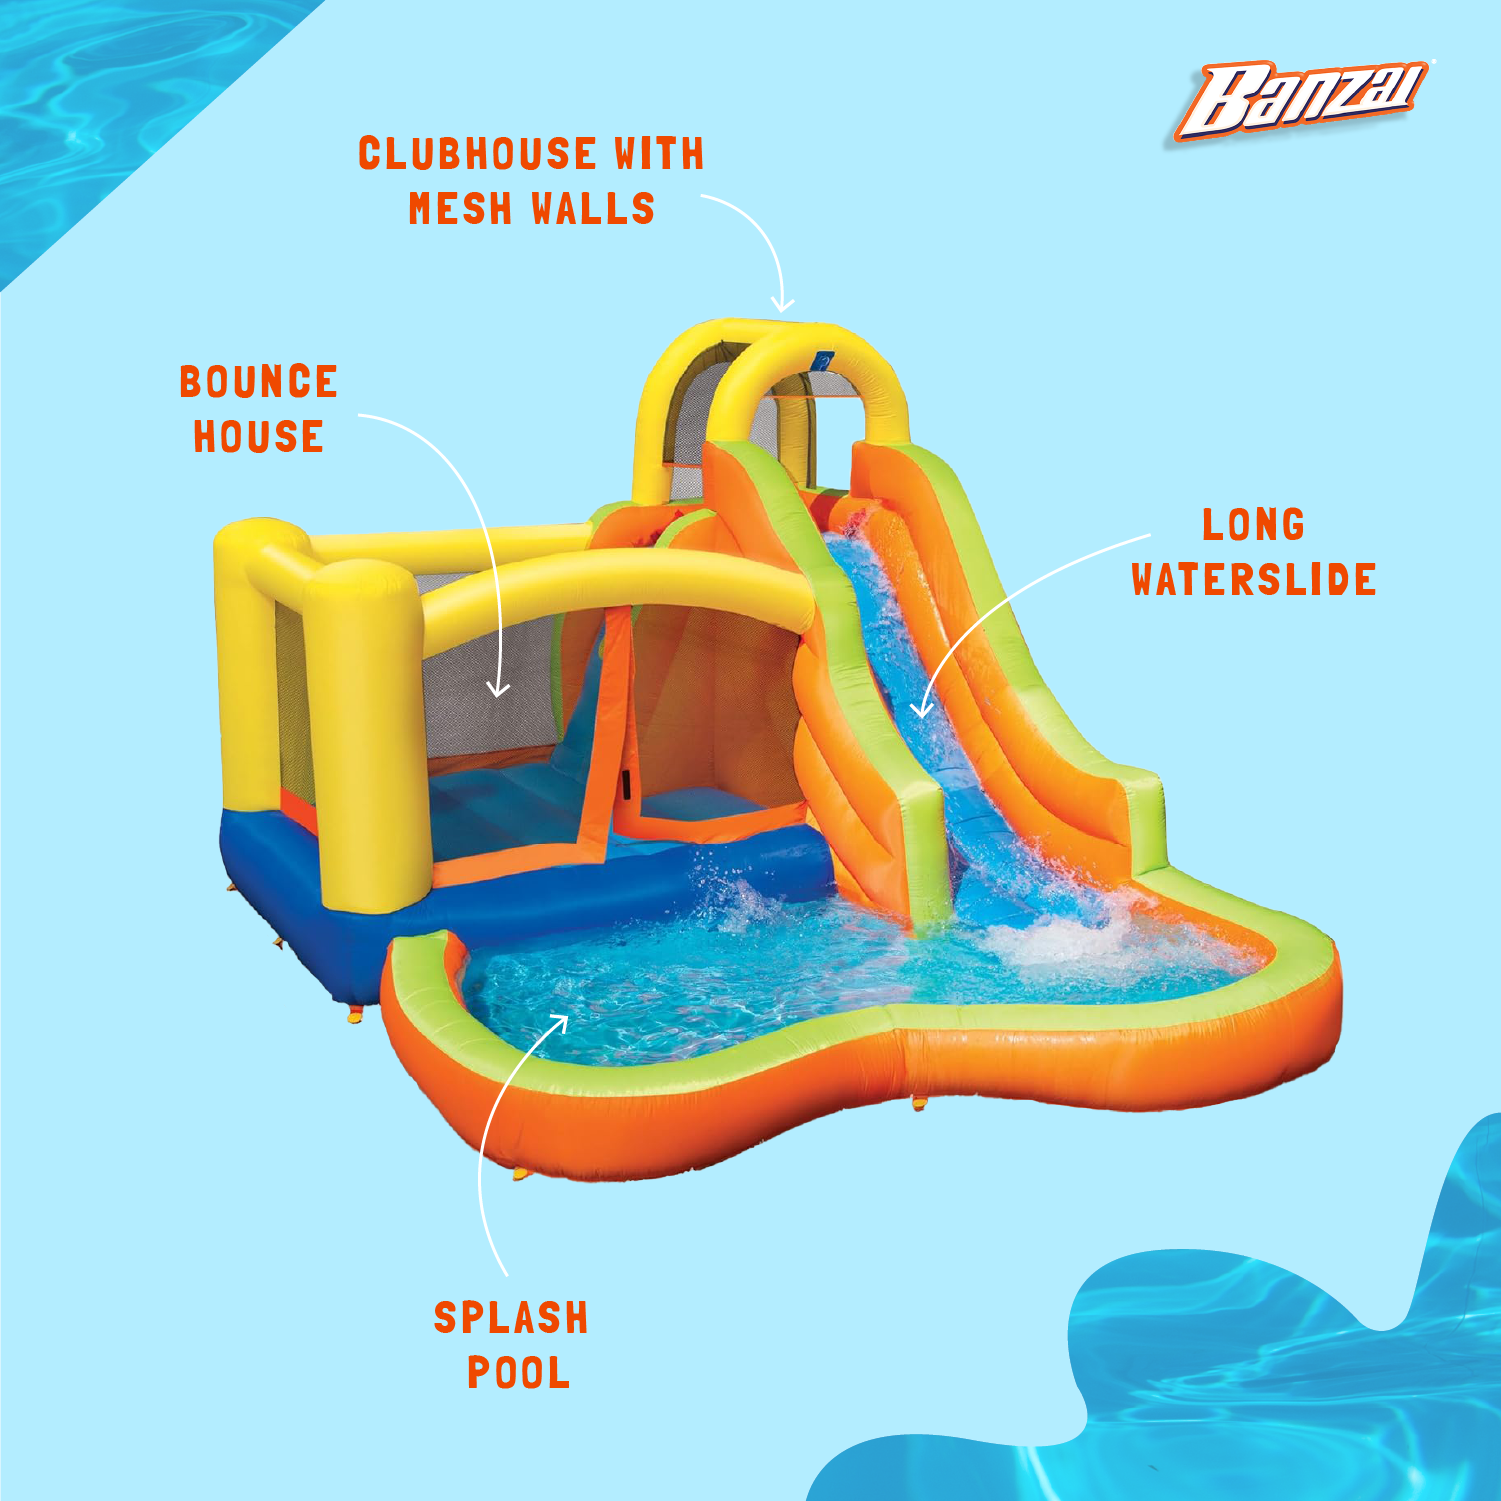 Banzai Sun 'N Splash Fun Kids Inflatable Bounce House and Water Slide Park - image 3 of 11